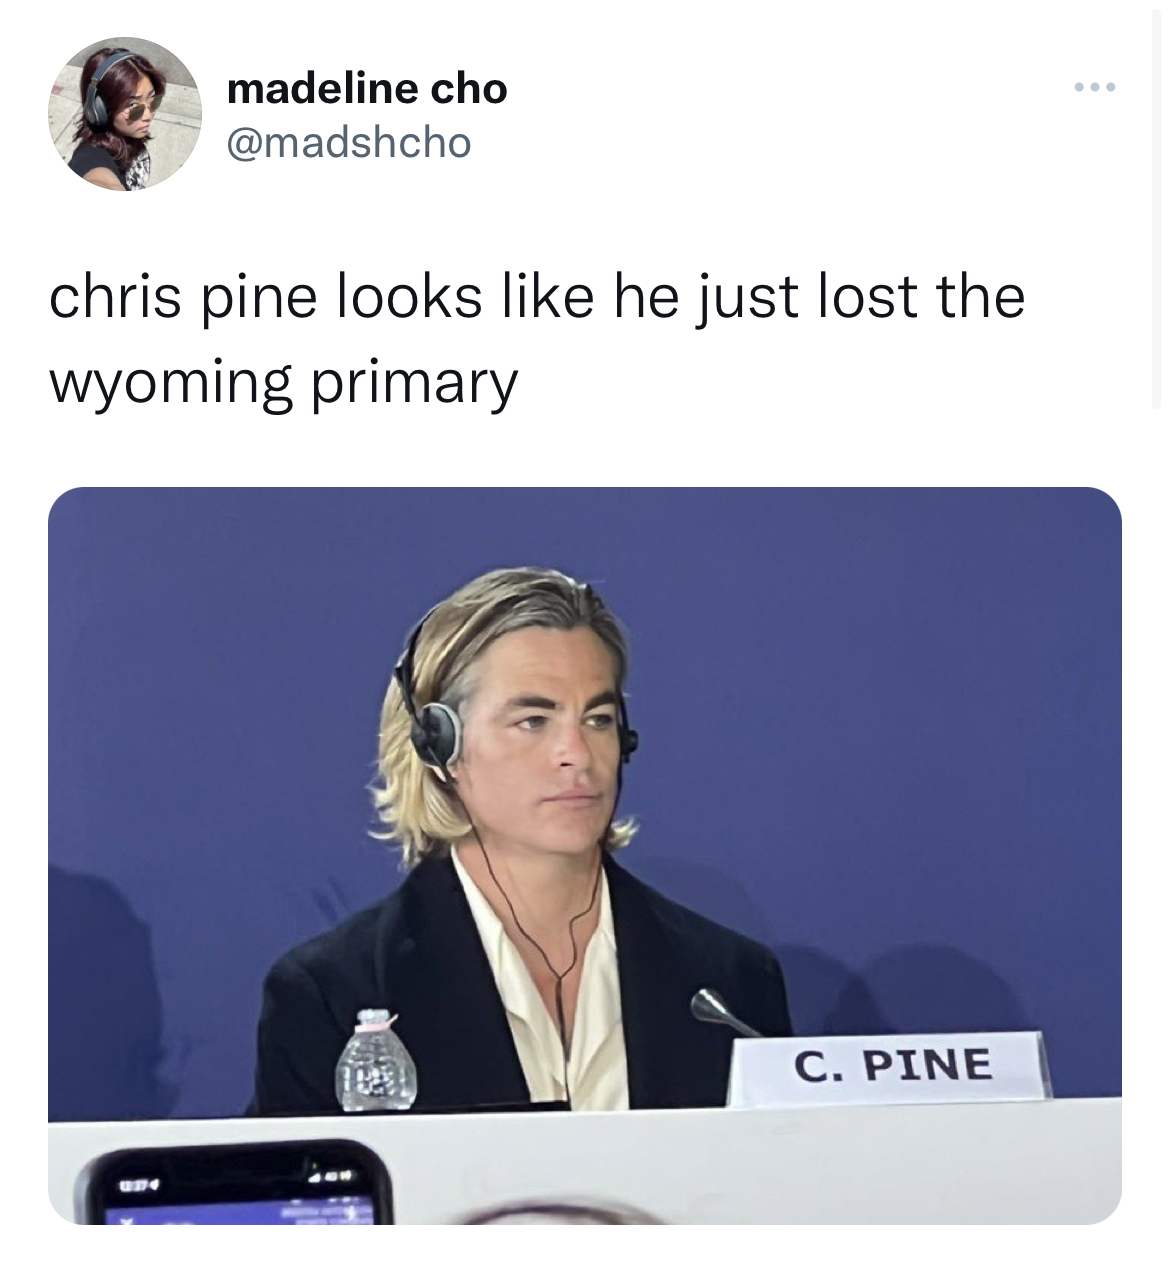 Chris Pine Venice Film Festival Memes - Chris Pine - madeline cho chris pine looks he just lost the wyoming primary ! C. Pine